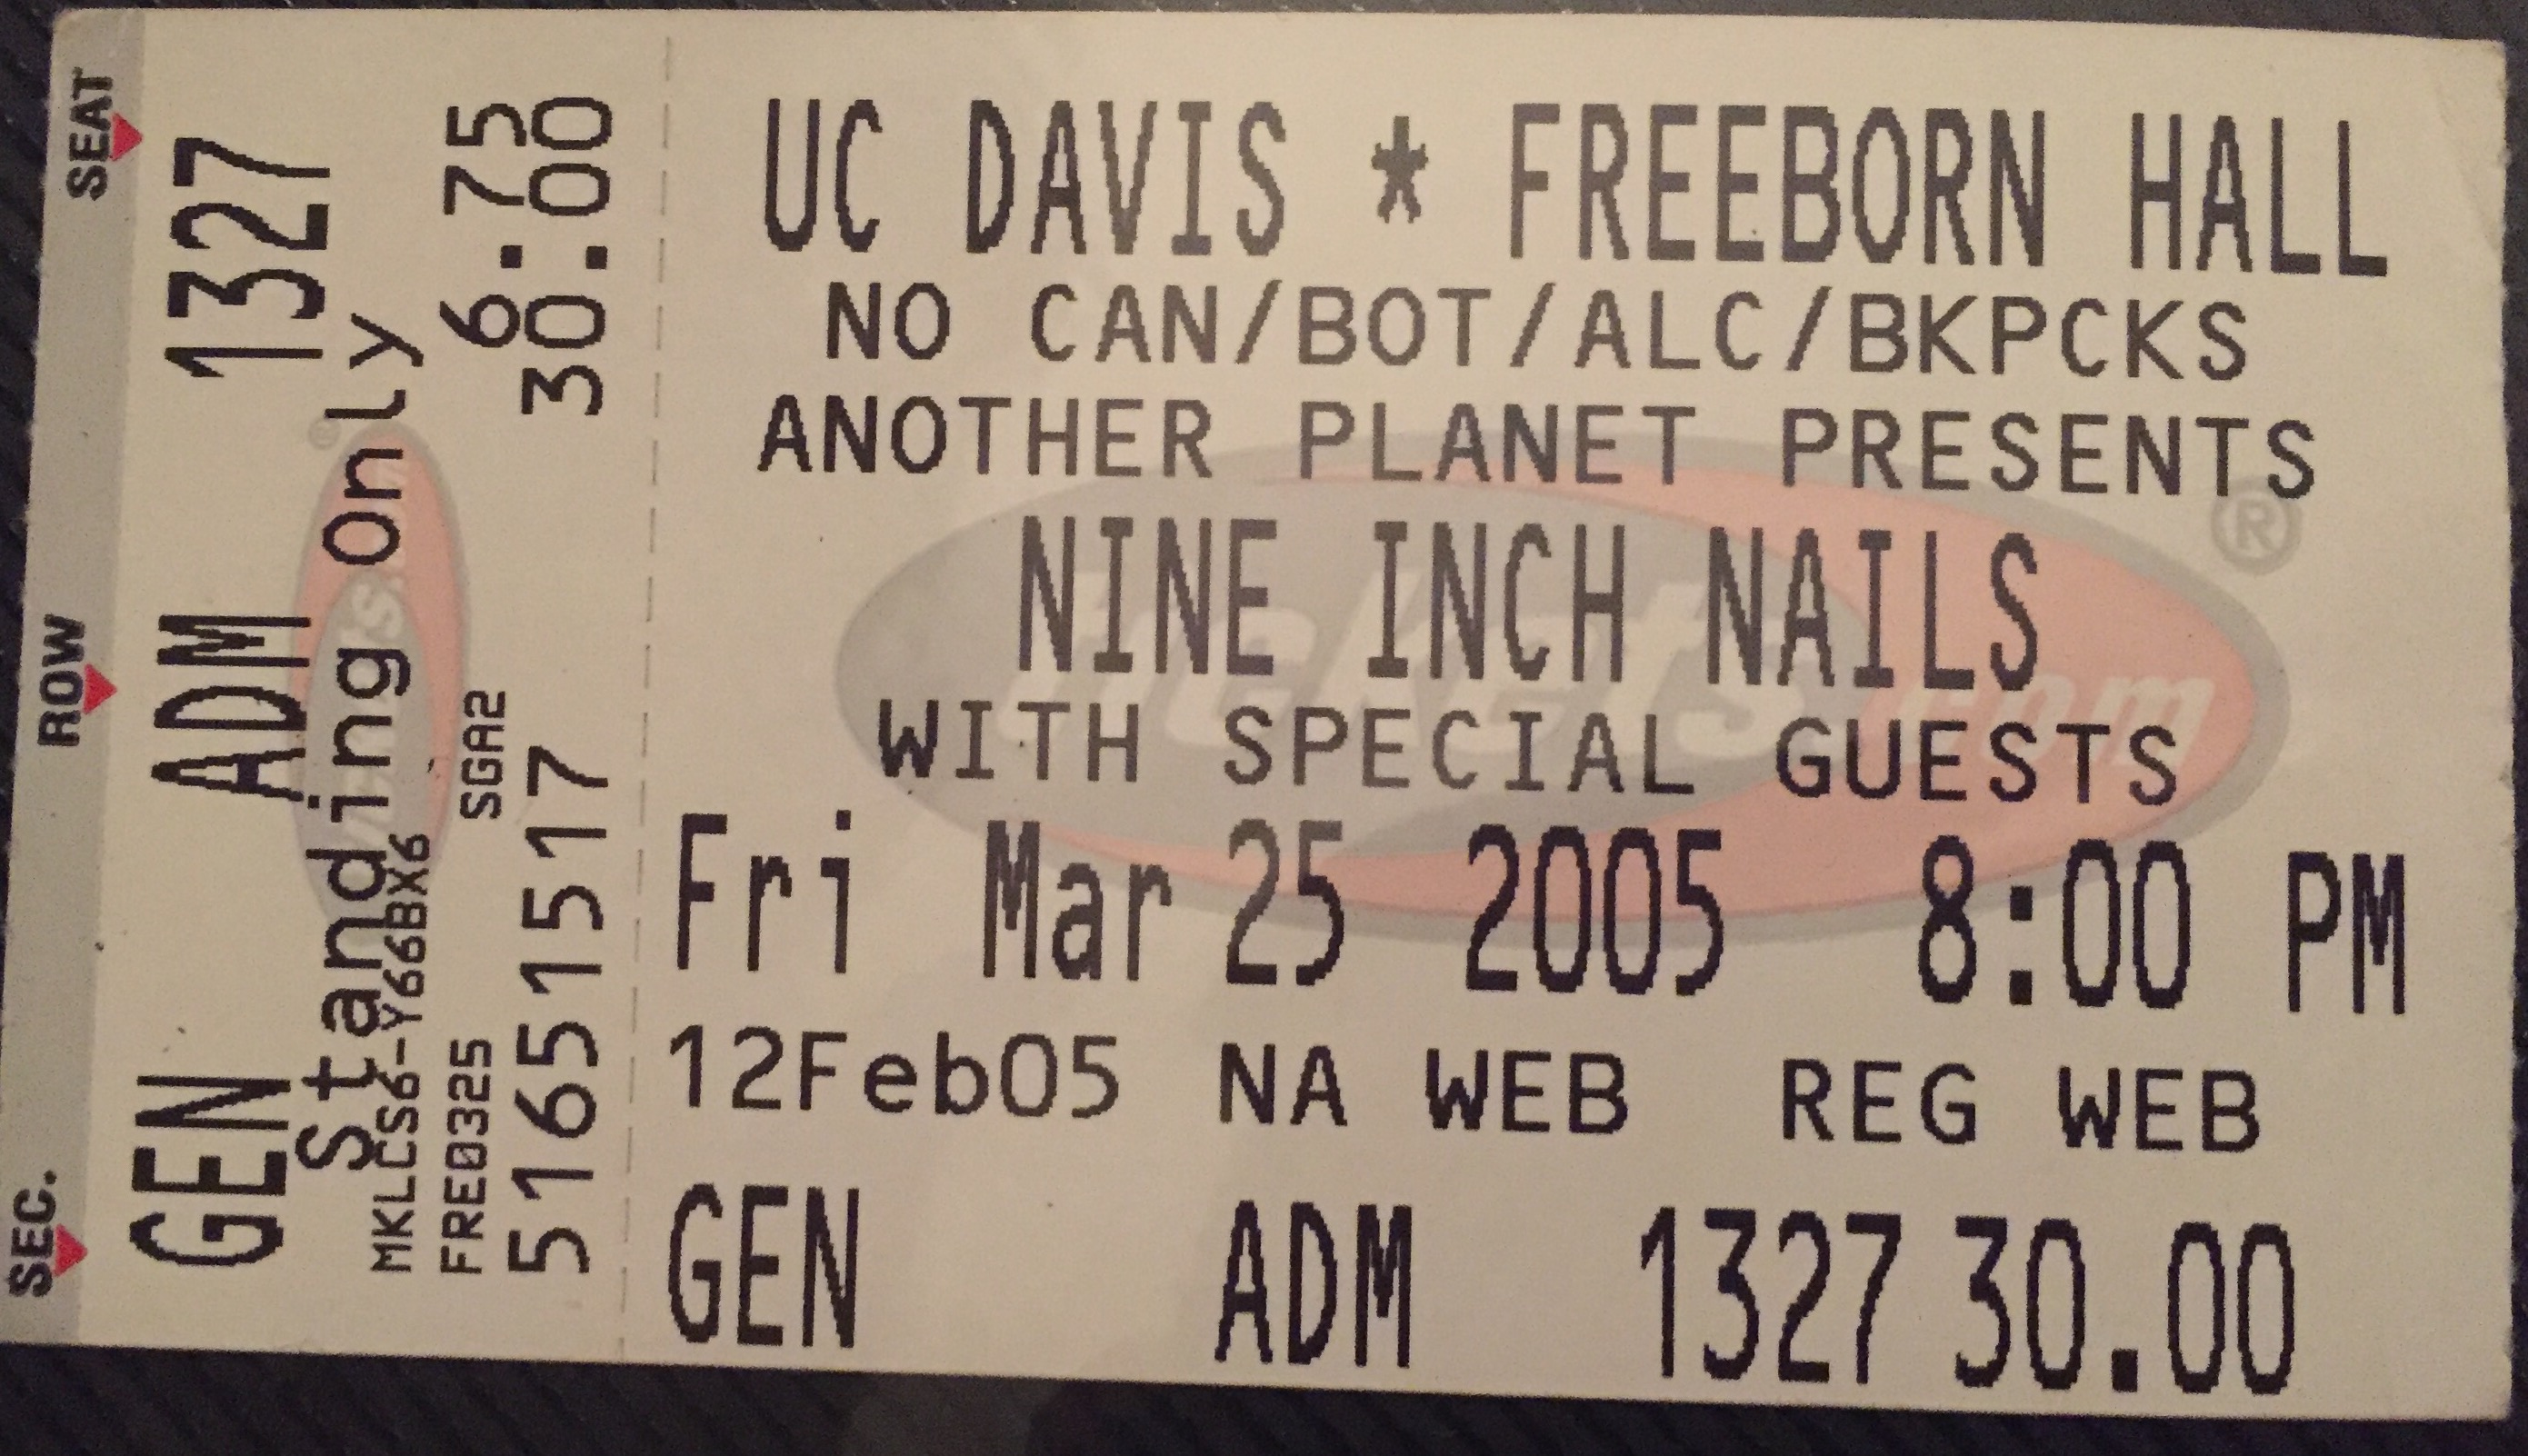 2005/03/25 Ticket